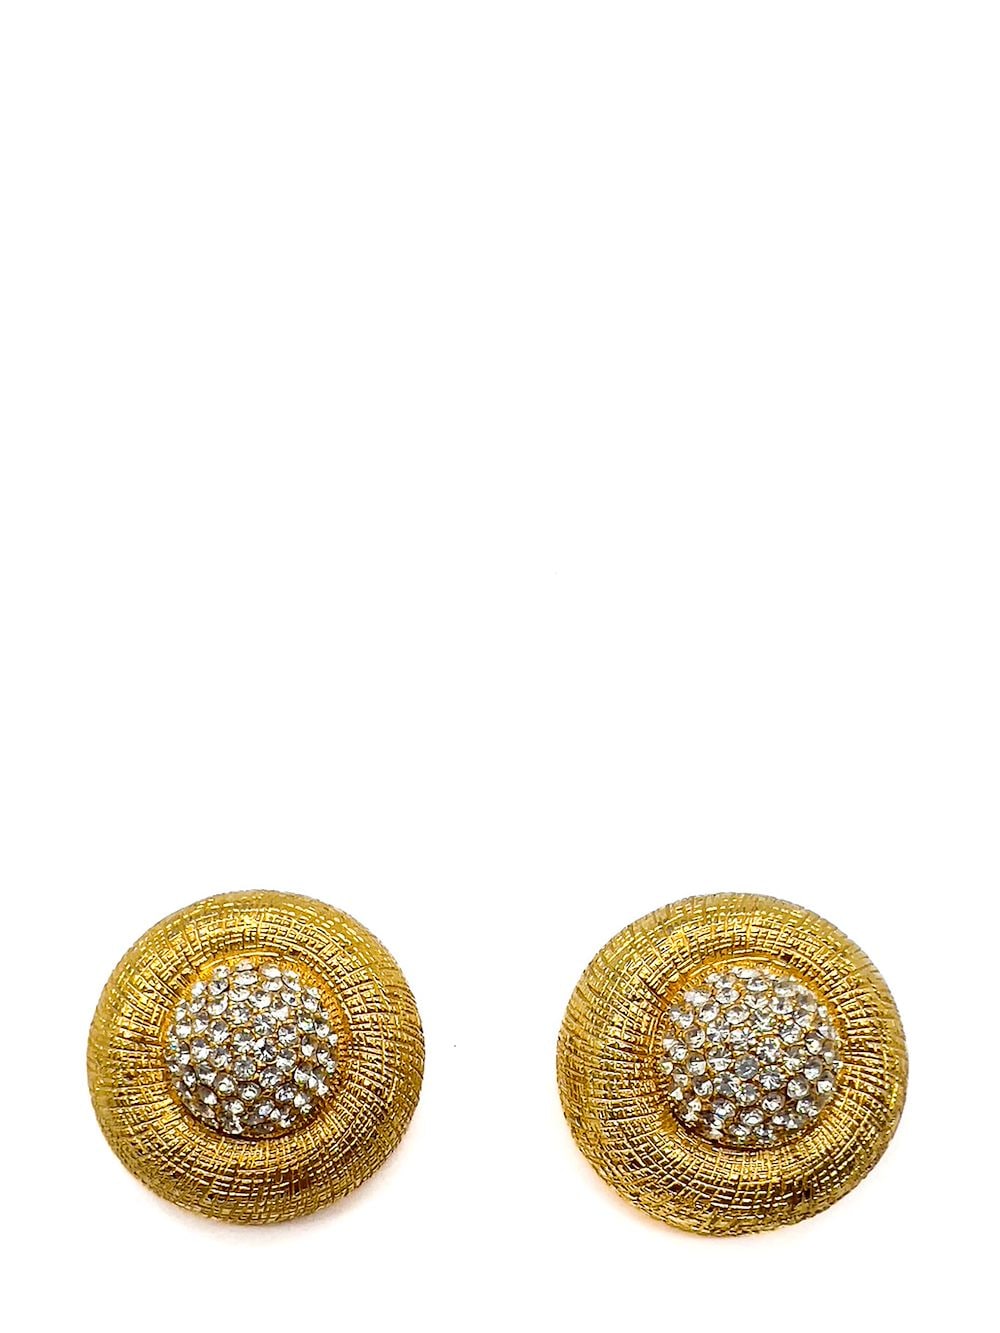 Jennifer Gibson Jewellery Vintage Etched Gold & Crystal Dome Earrings 1970s von Jennifer Gibson Jewellery